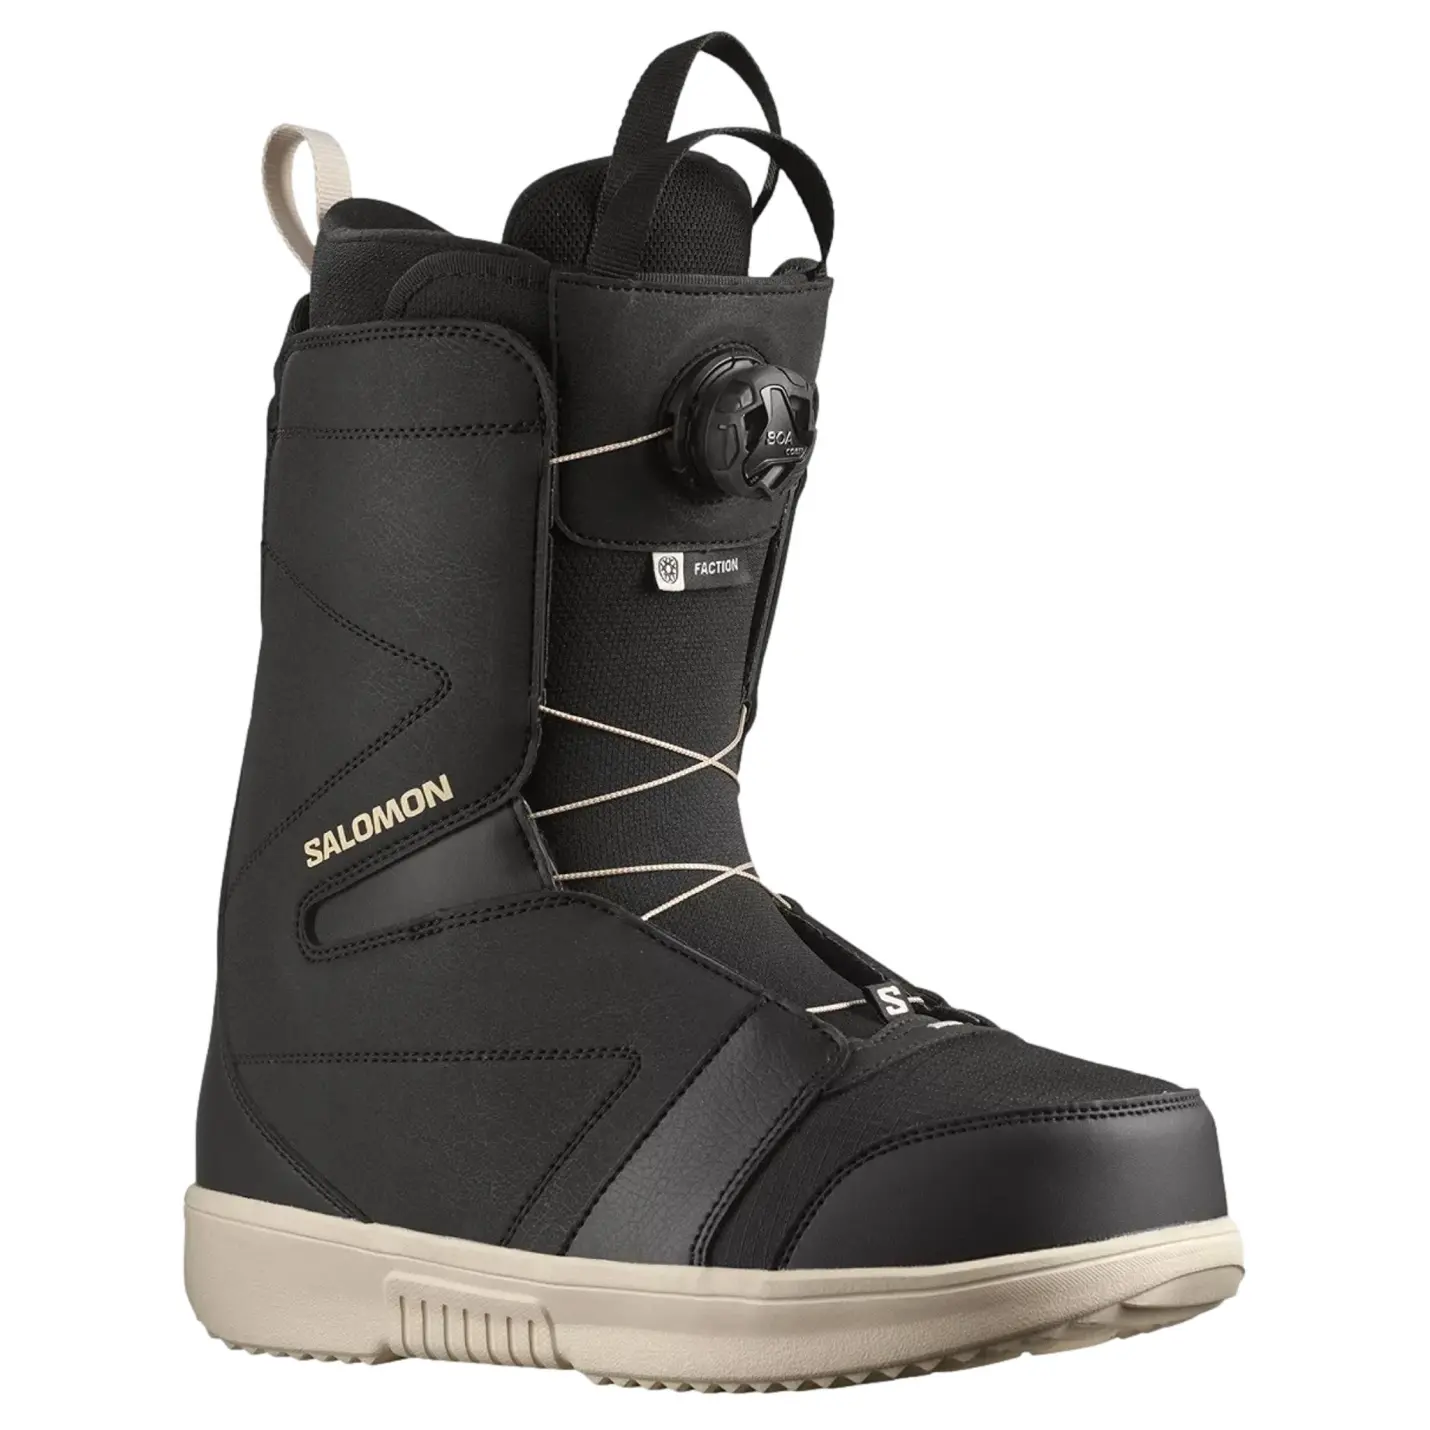 Salomon snowboard online shop - Salomon snowboards boots